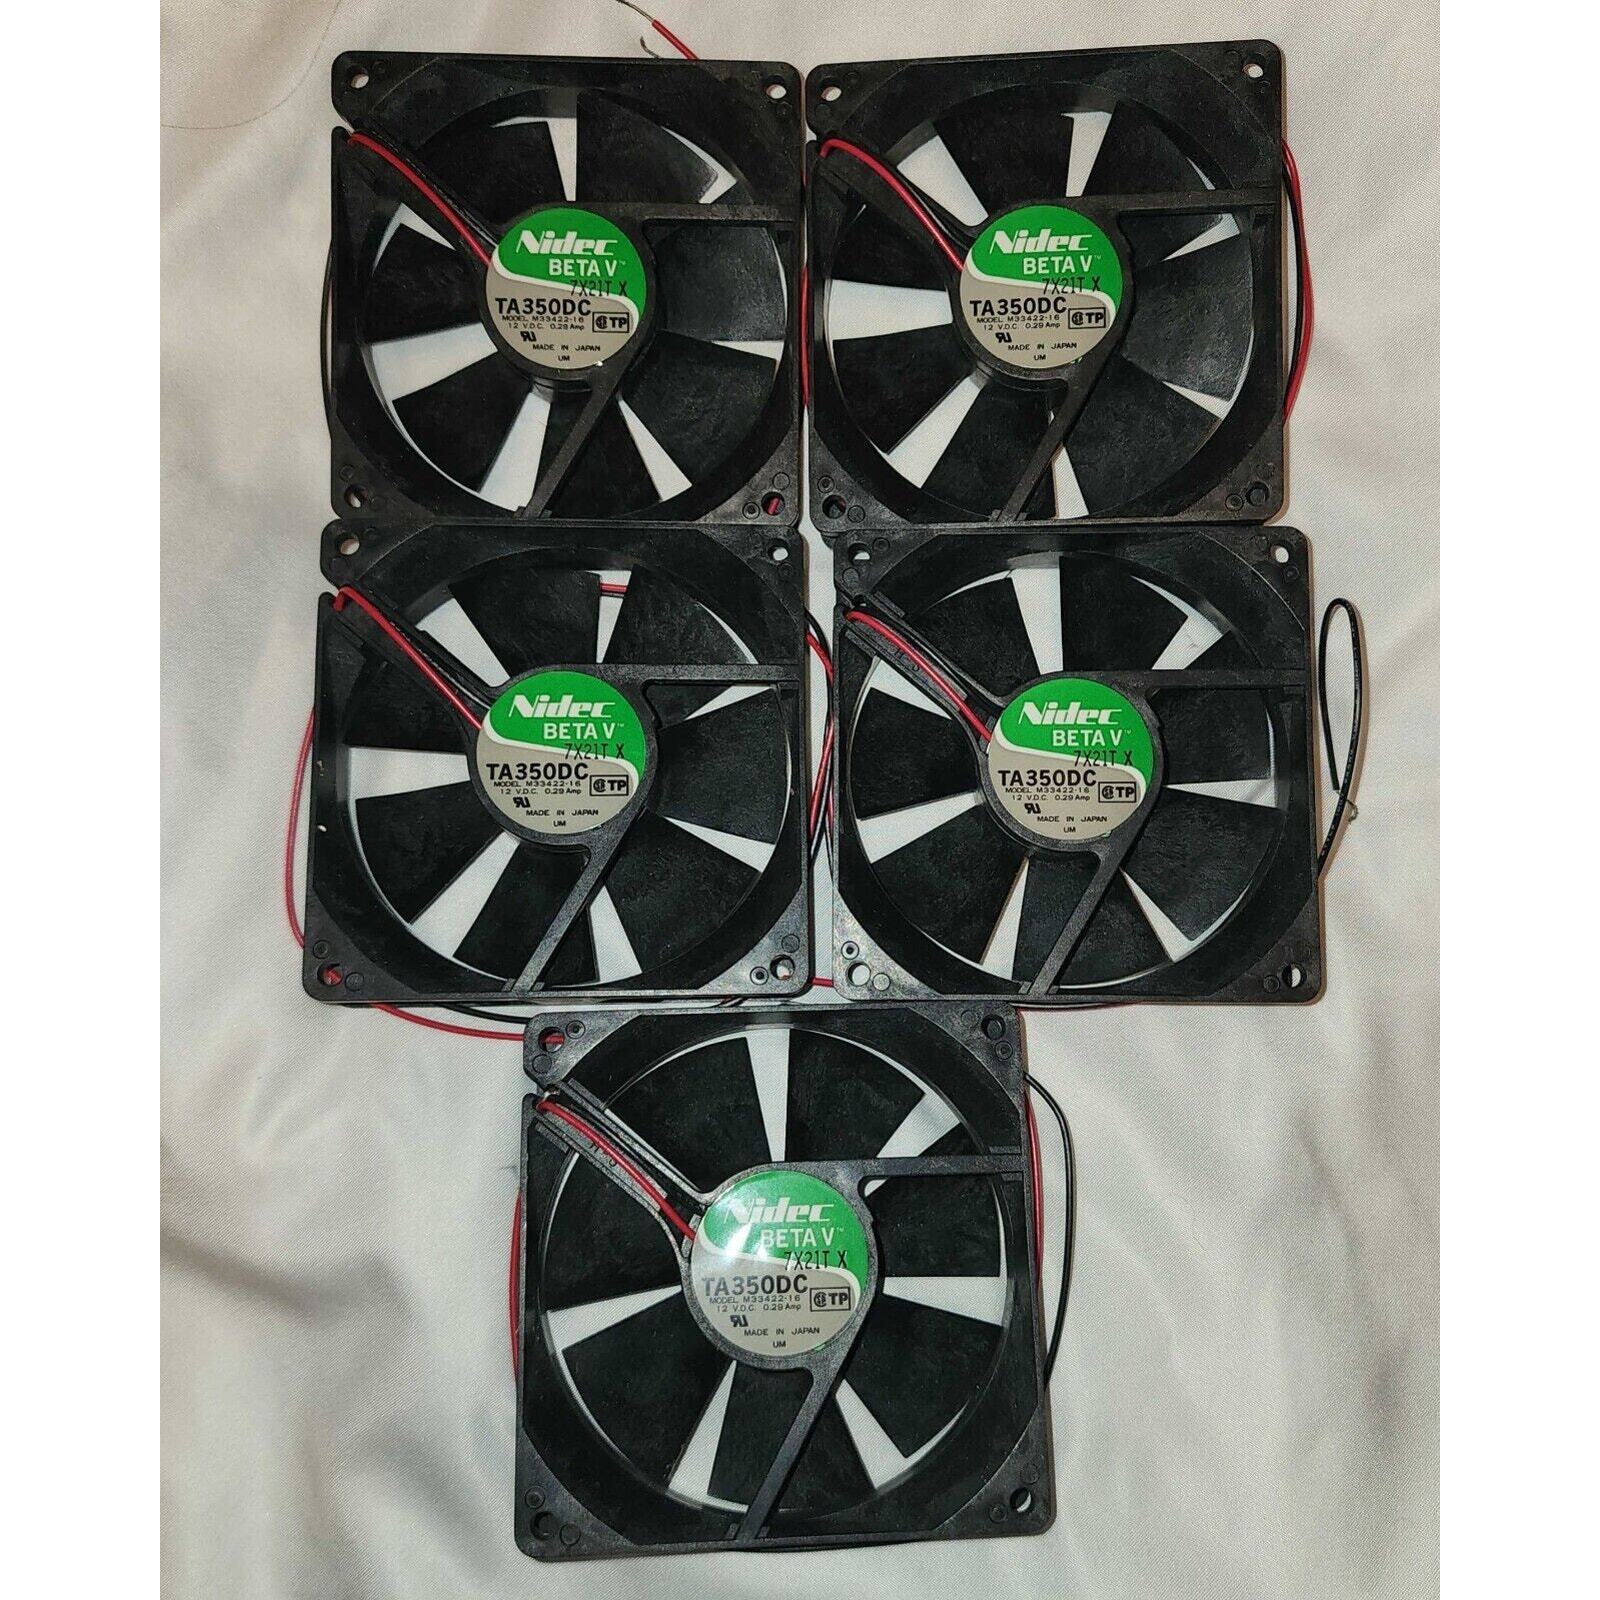 5 NIDEC Beta V TA350DC Double Ball Inverter Cooling Fan M33910-16 12V .29A New